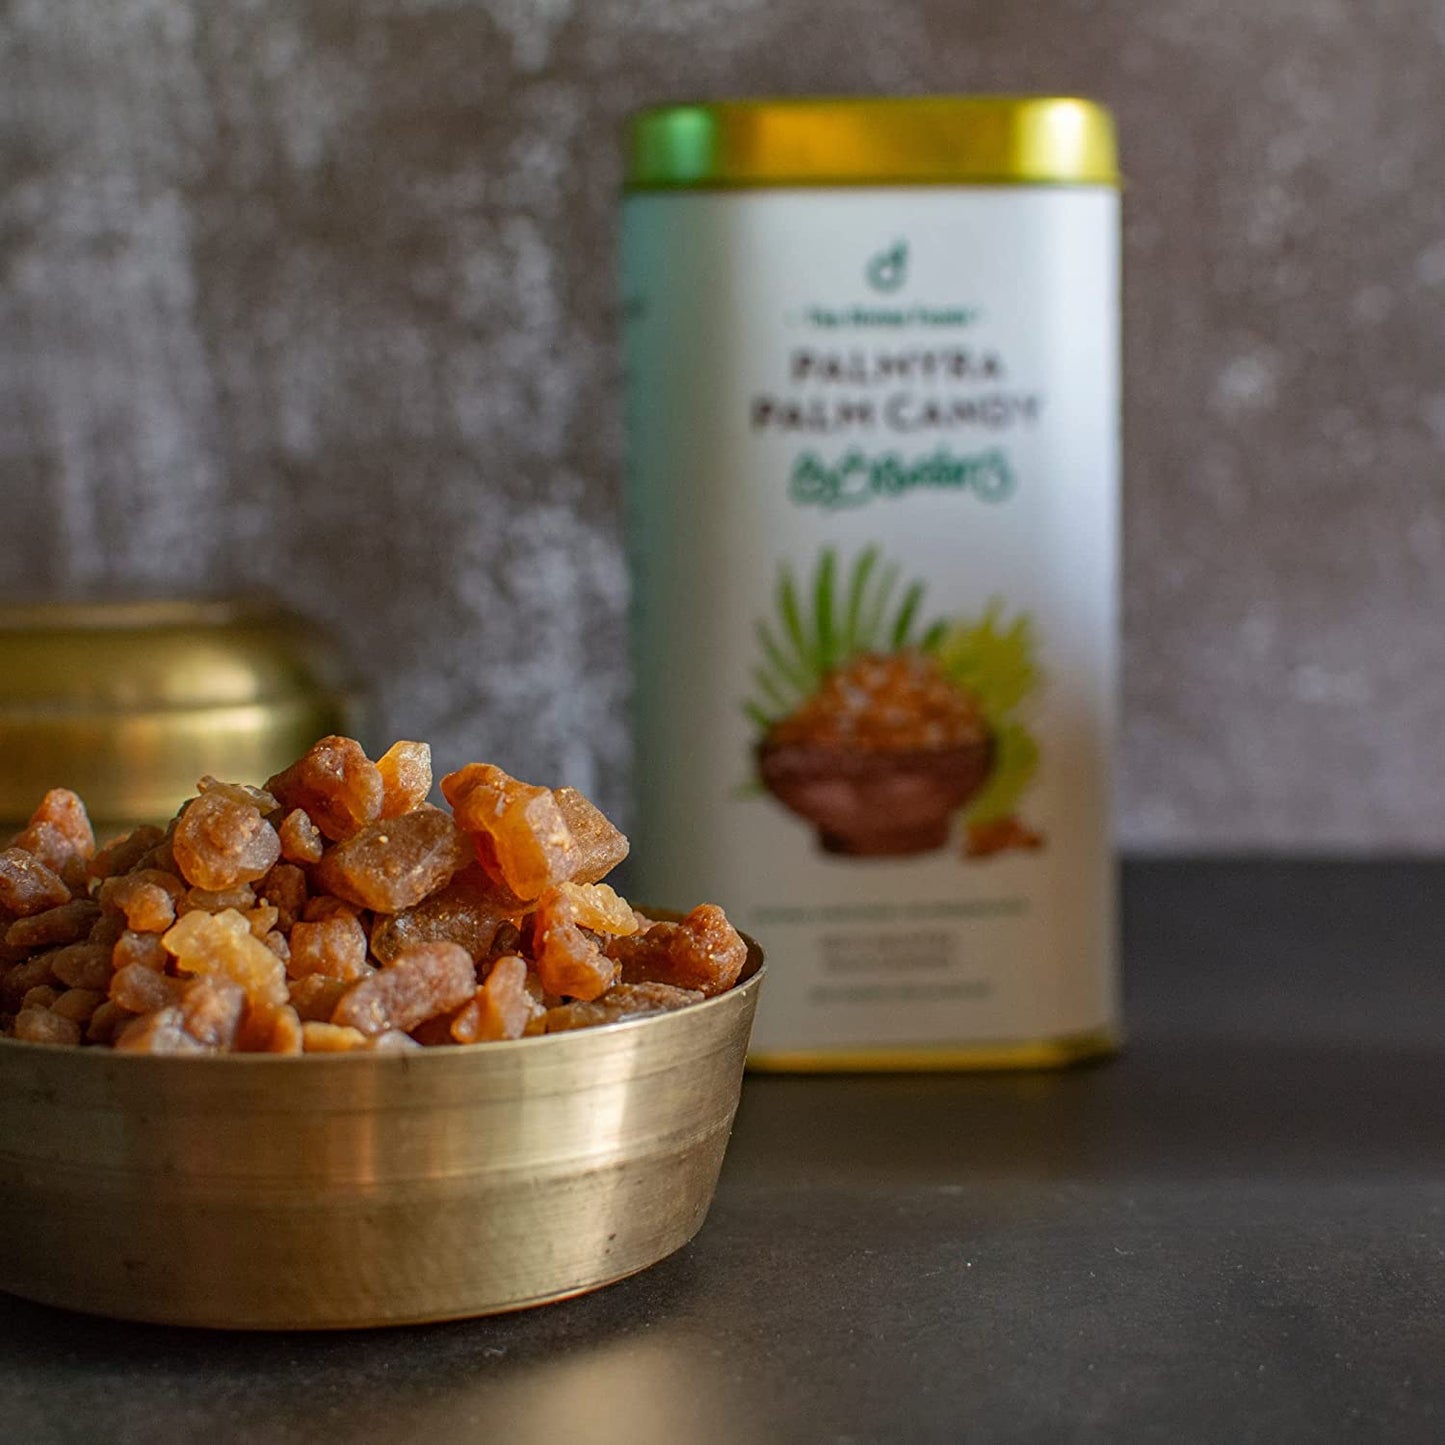 Organic Palm Candy | Natural Sweetener, Sugar Alternative | Unrefined | Candy for Coffee, Tea & Recipes | Vegan | Panakarkandu (250 gm)